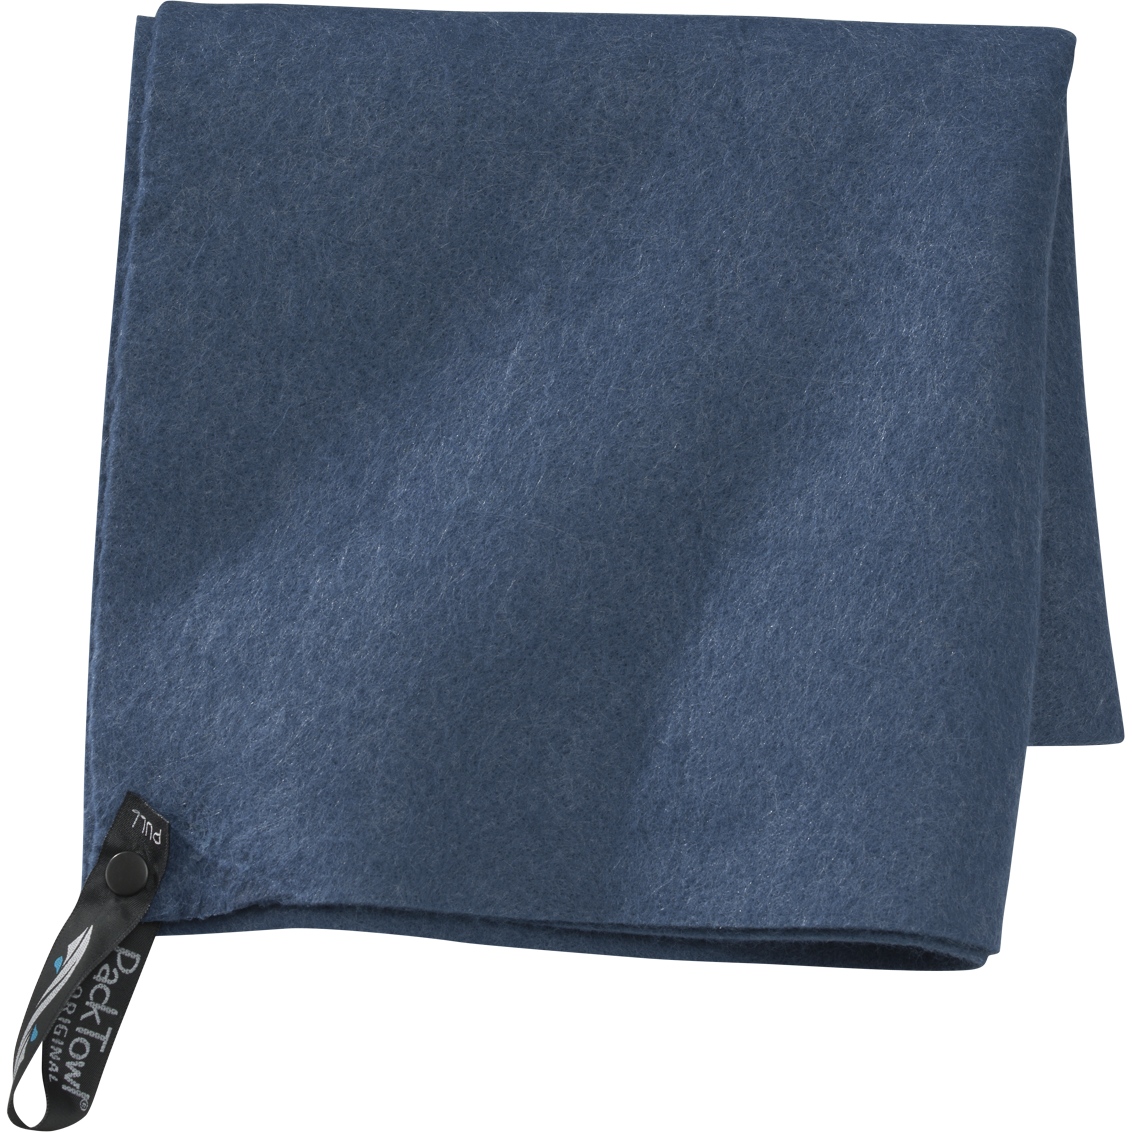 Picture of PackTowl Original M Towel - blue